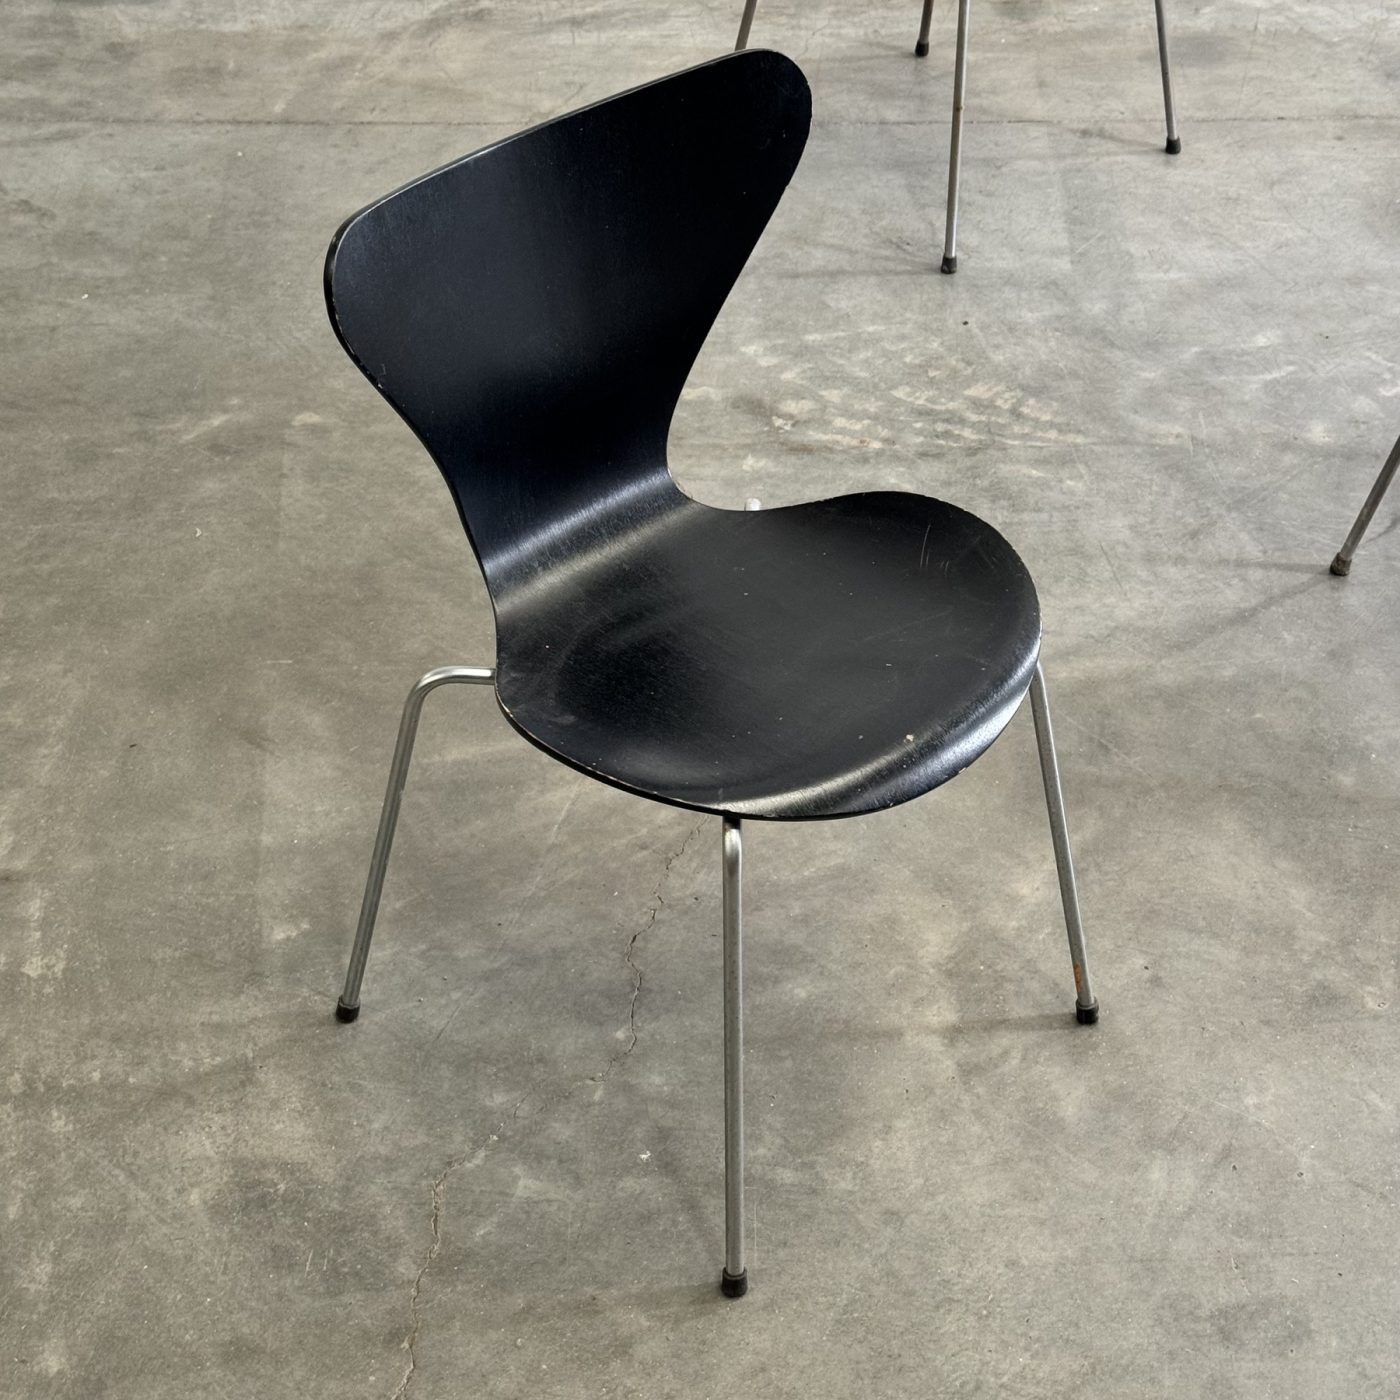 objet-vagabond-jacobsen-chairs0005